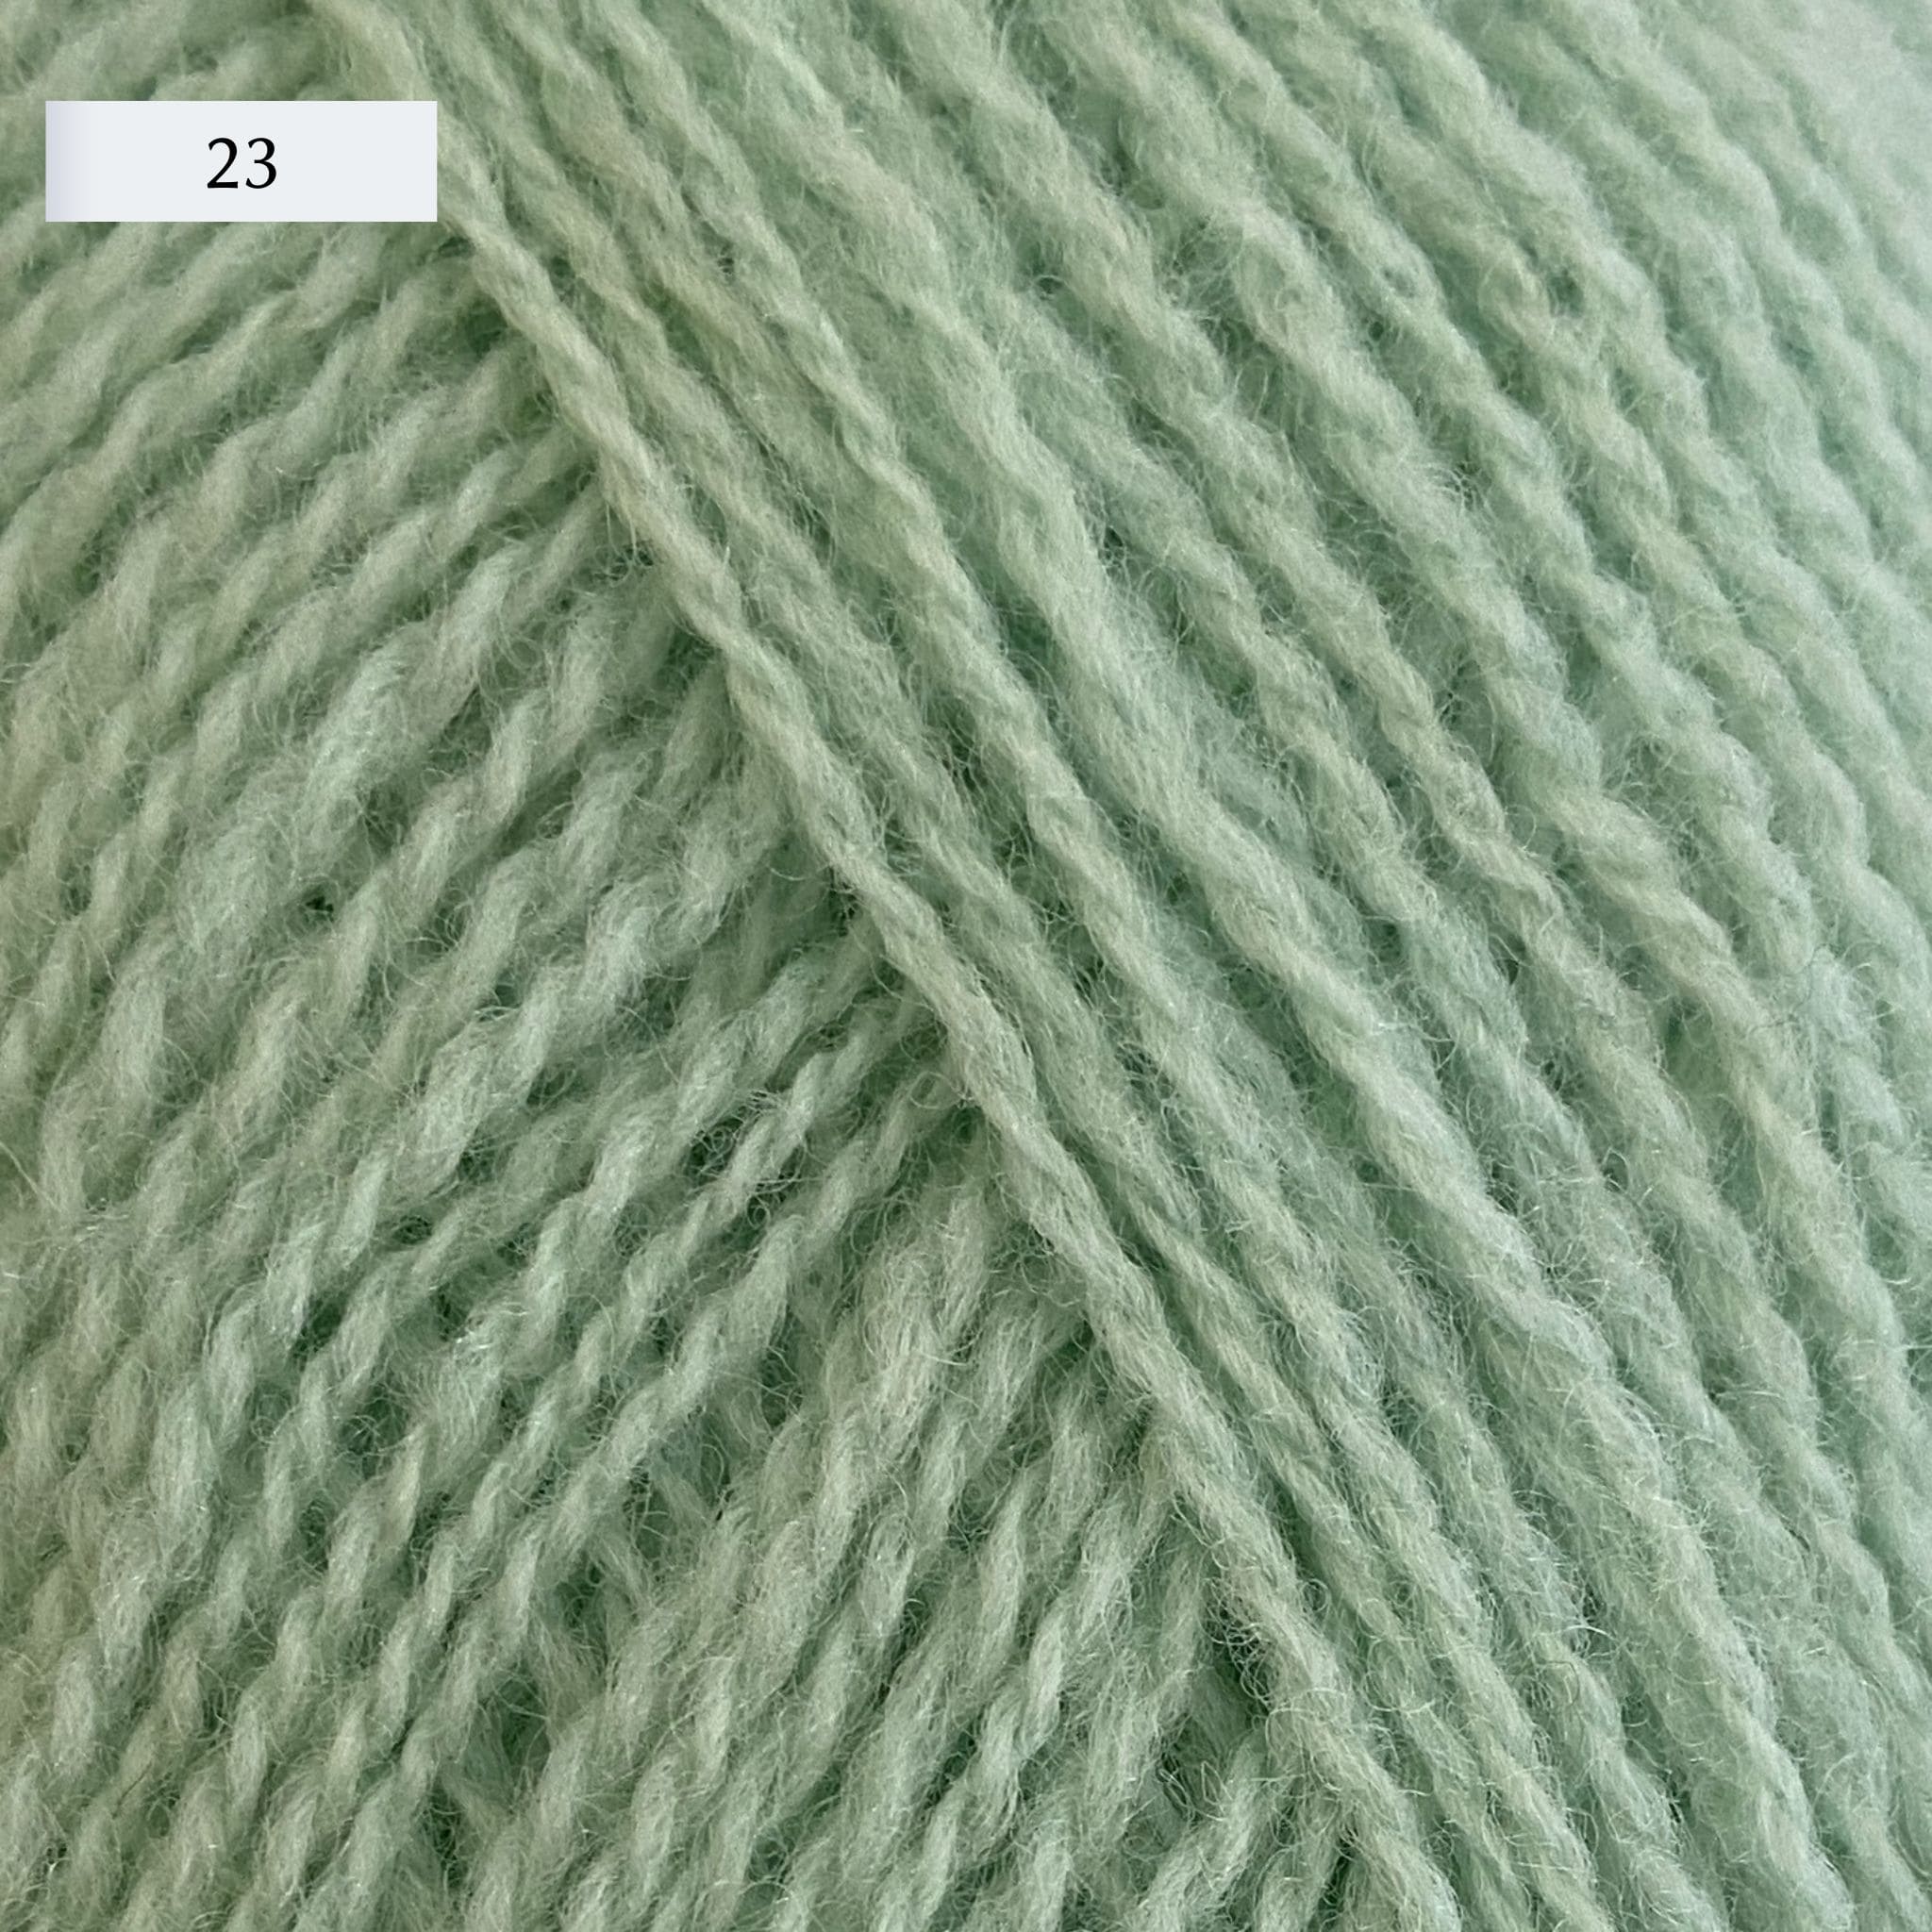 Rauma Lamullgarn, a fingering weight yarn, in color 23, a light minty green